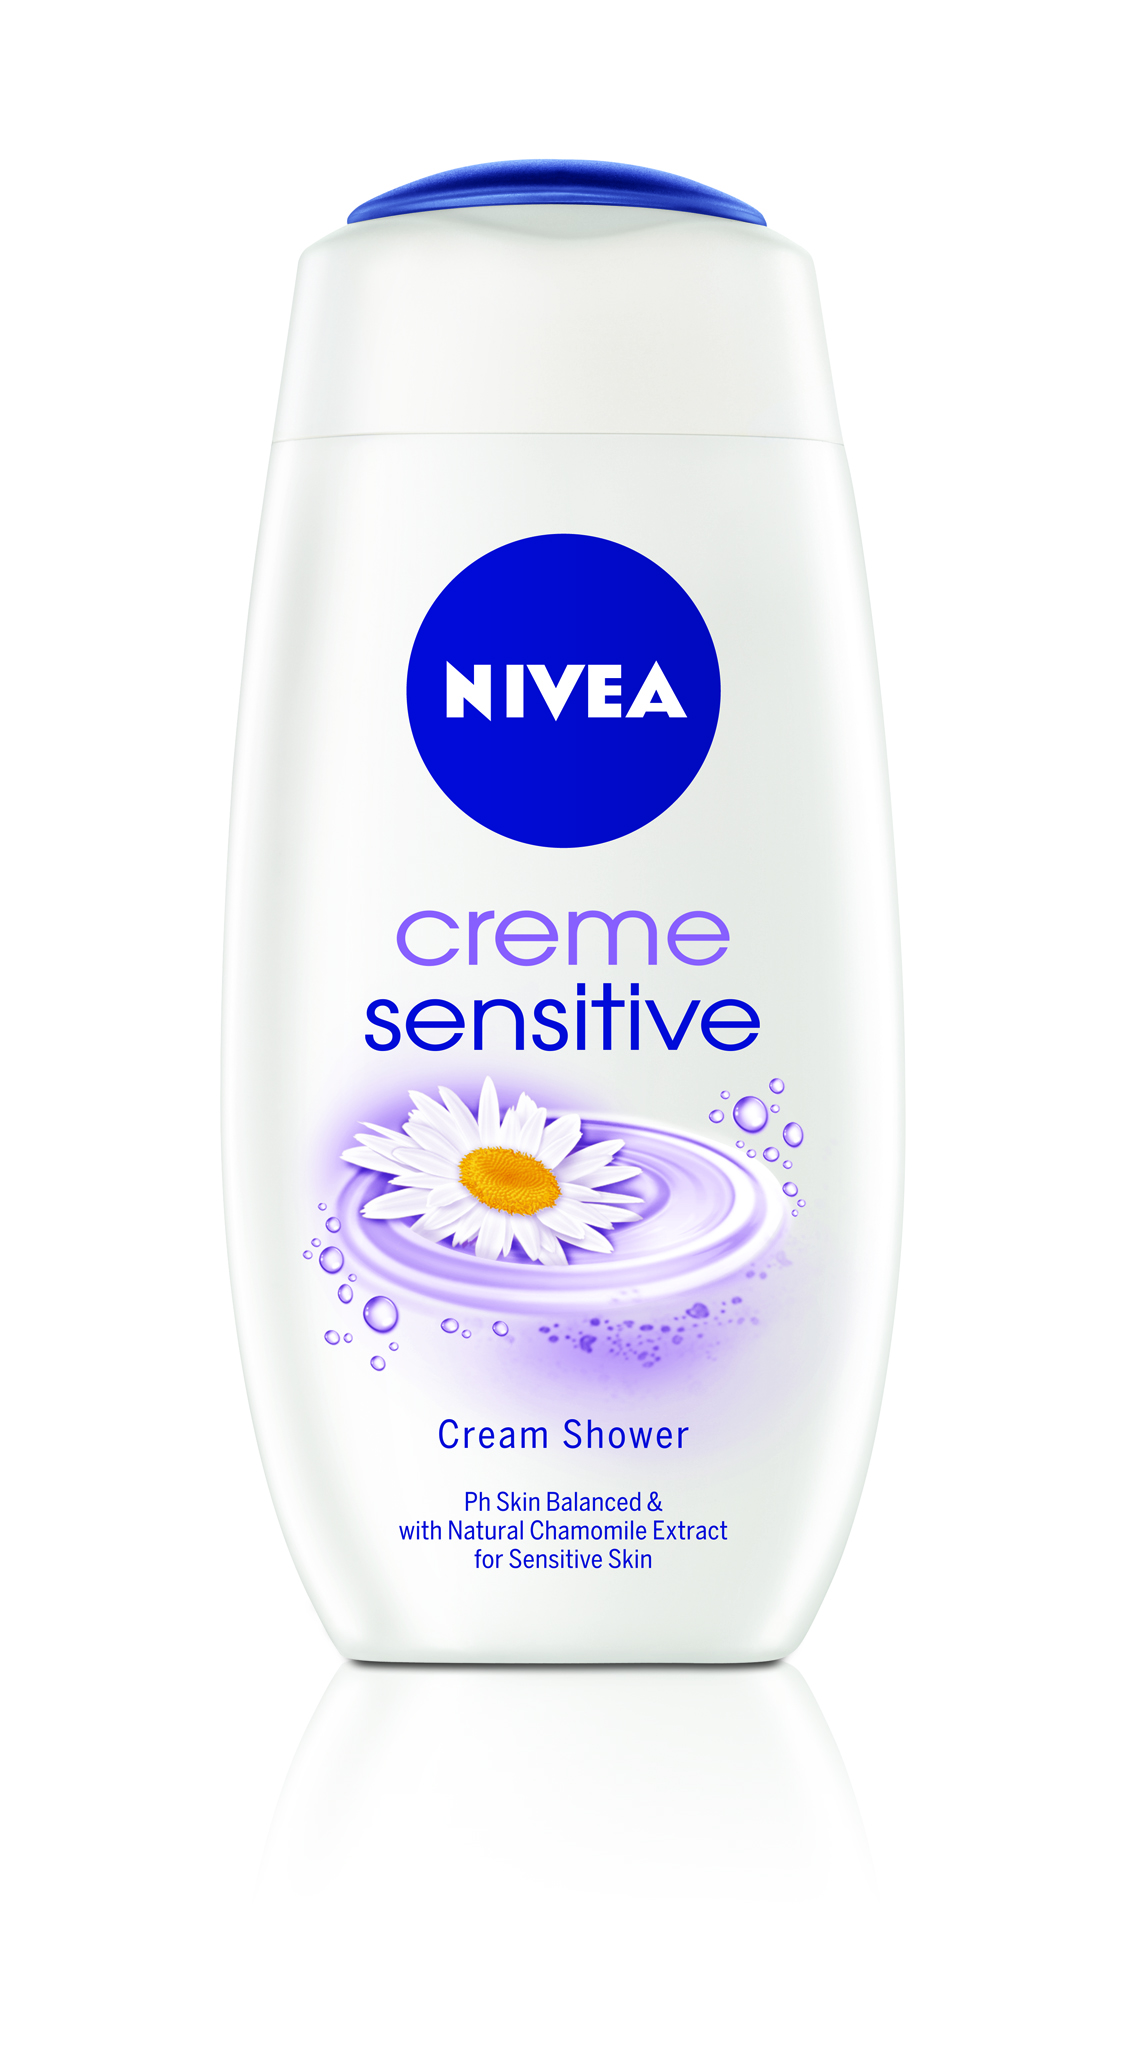 NIVEA Creme Sensitive krémtusfürdő 749Ft.jpg